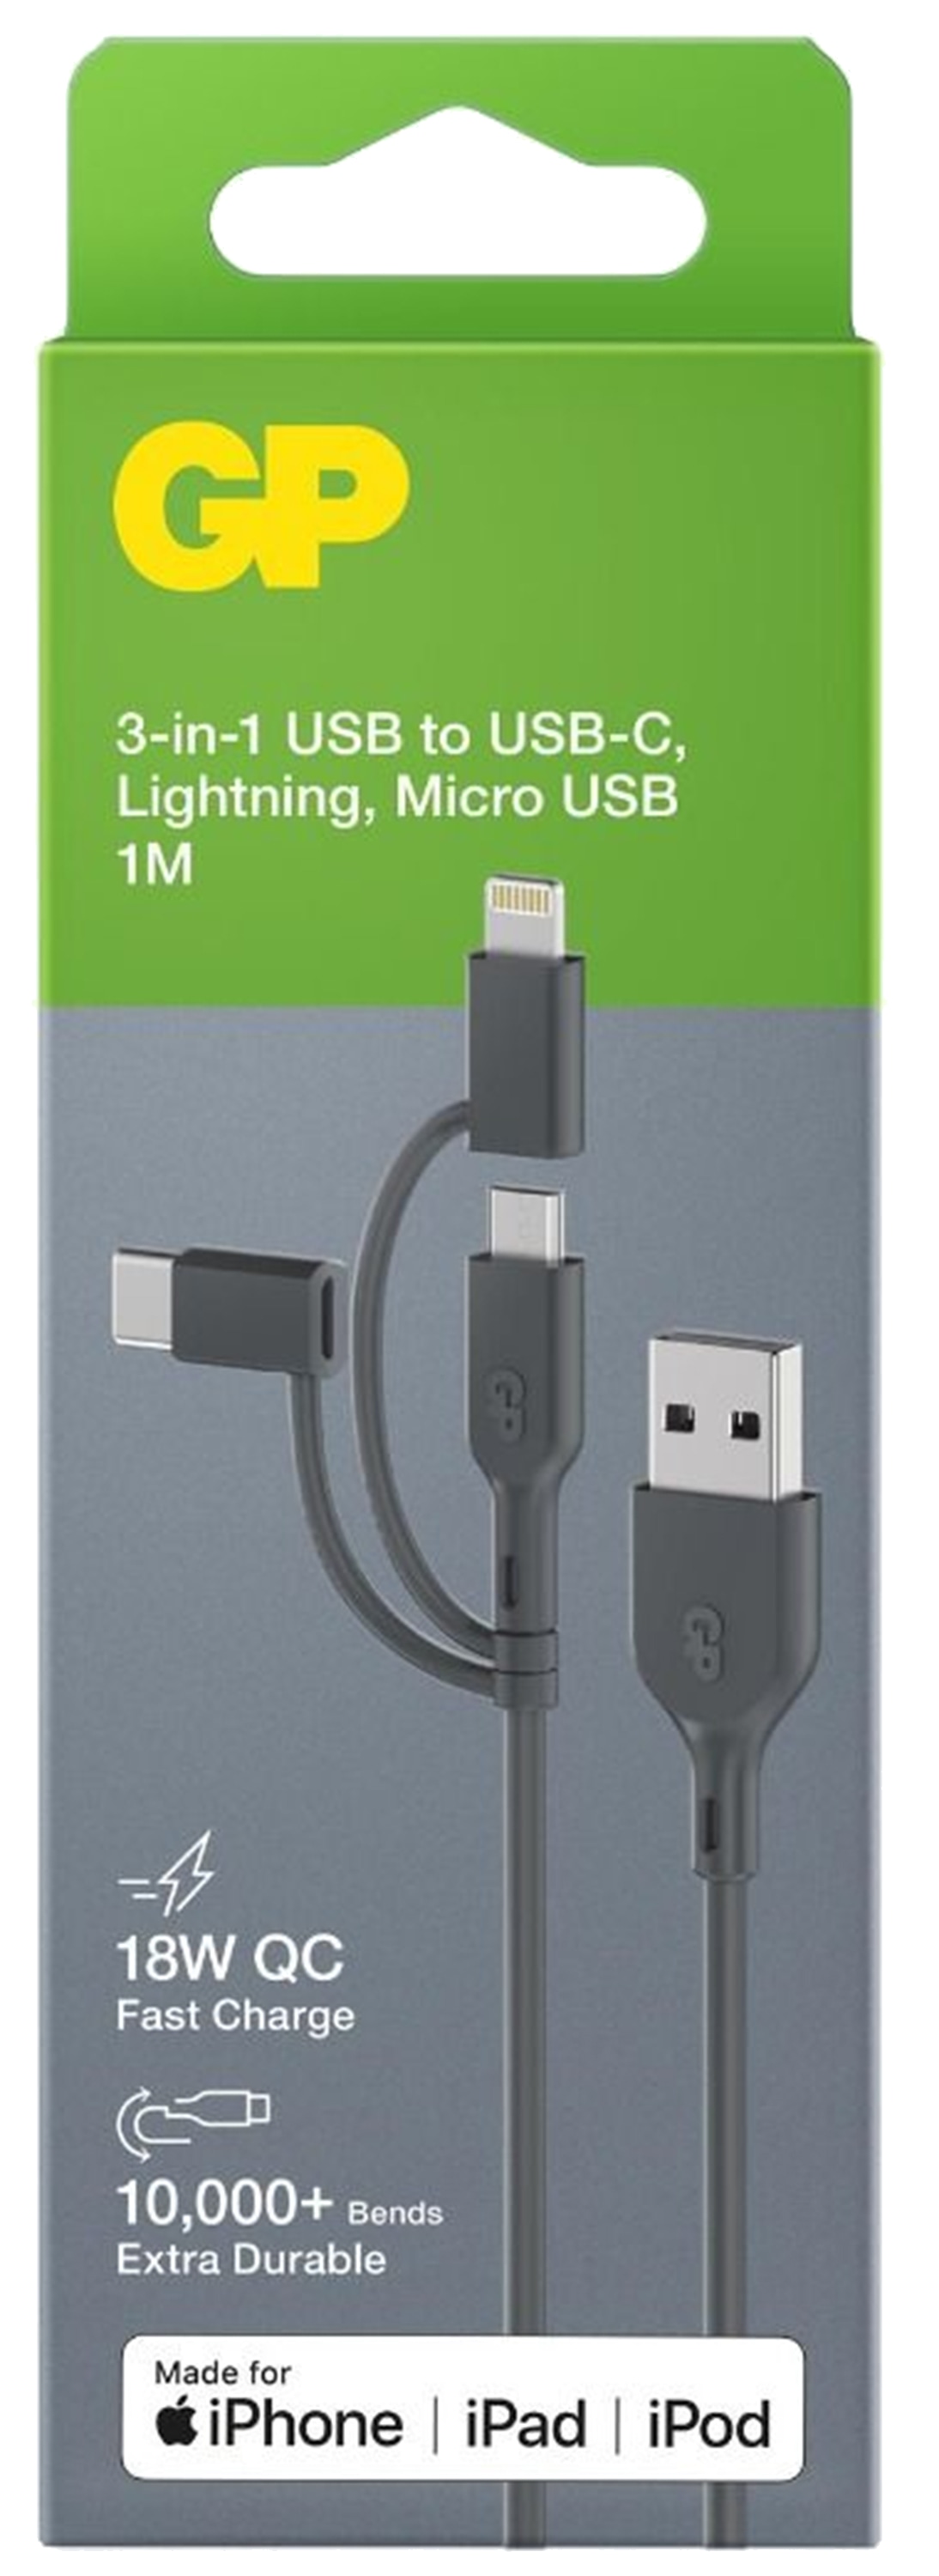 GP USB Lade-/Sync-Kabel CY1N 3-in-1-Kabel mit Micro USB, Lightning und USB-C